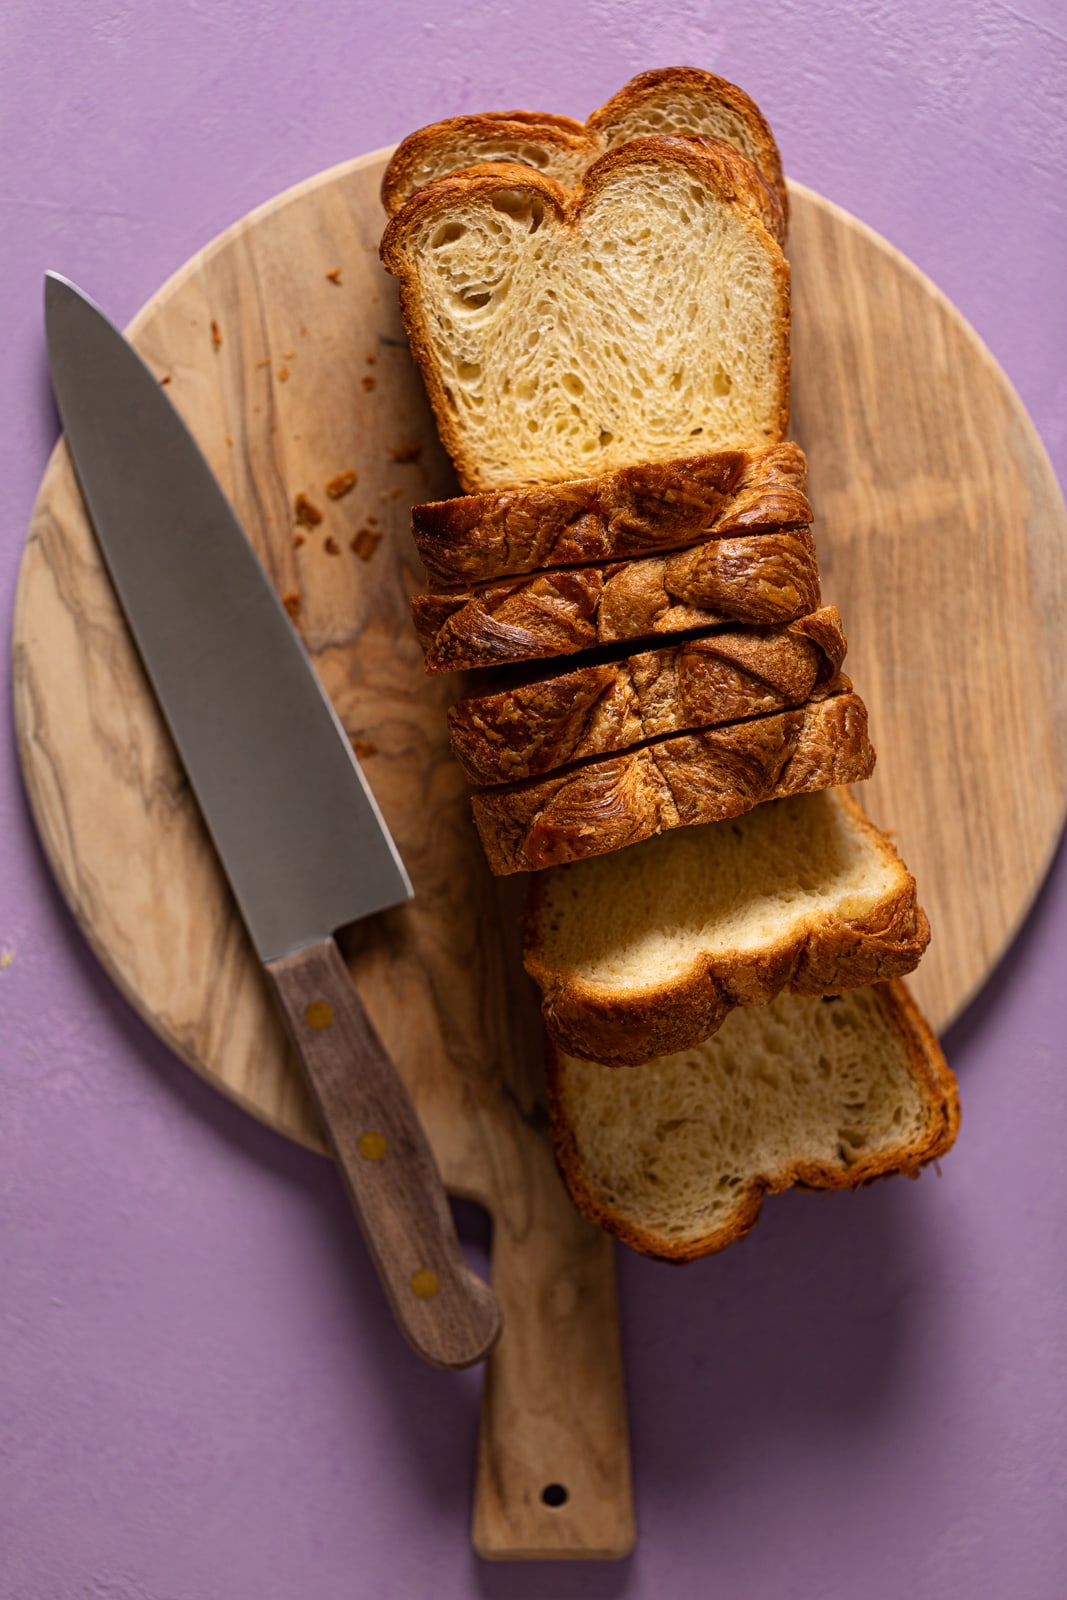 Sliced brioche bread on a cutting board with a knife